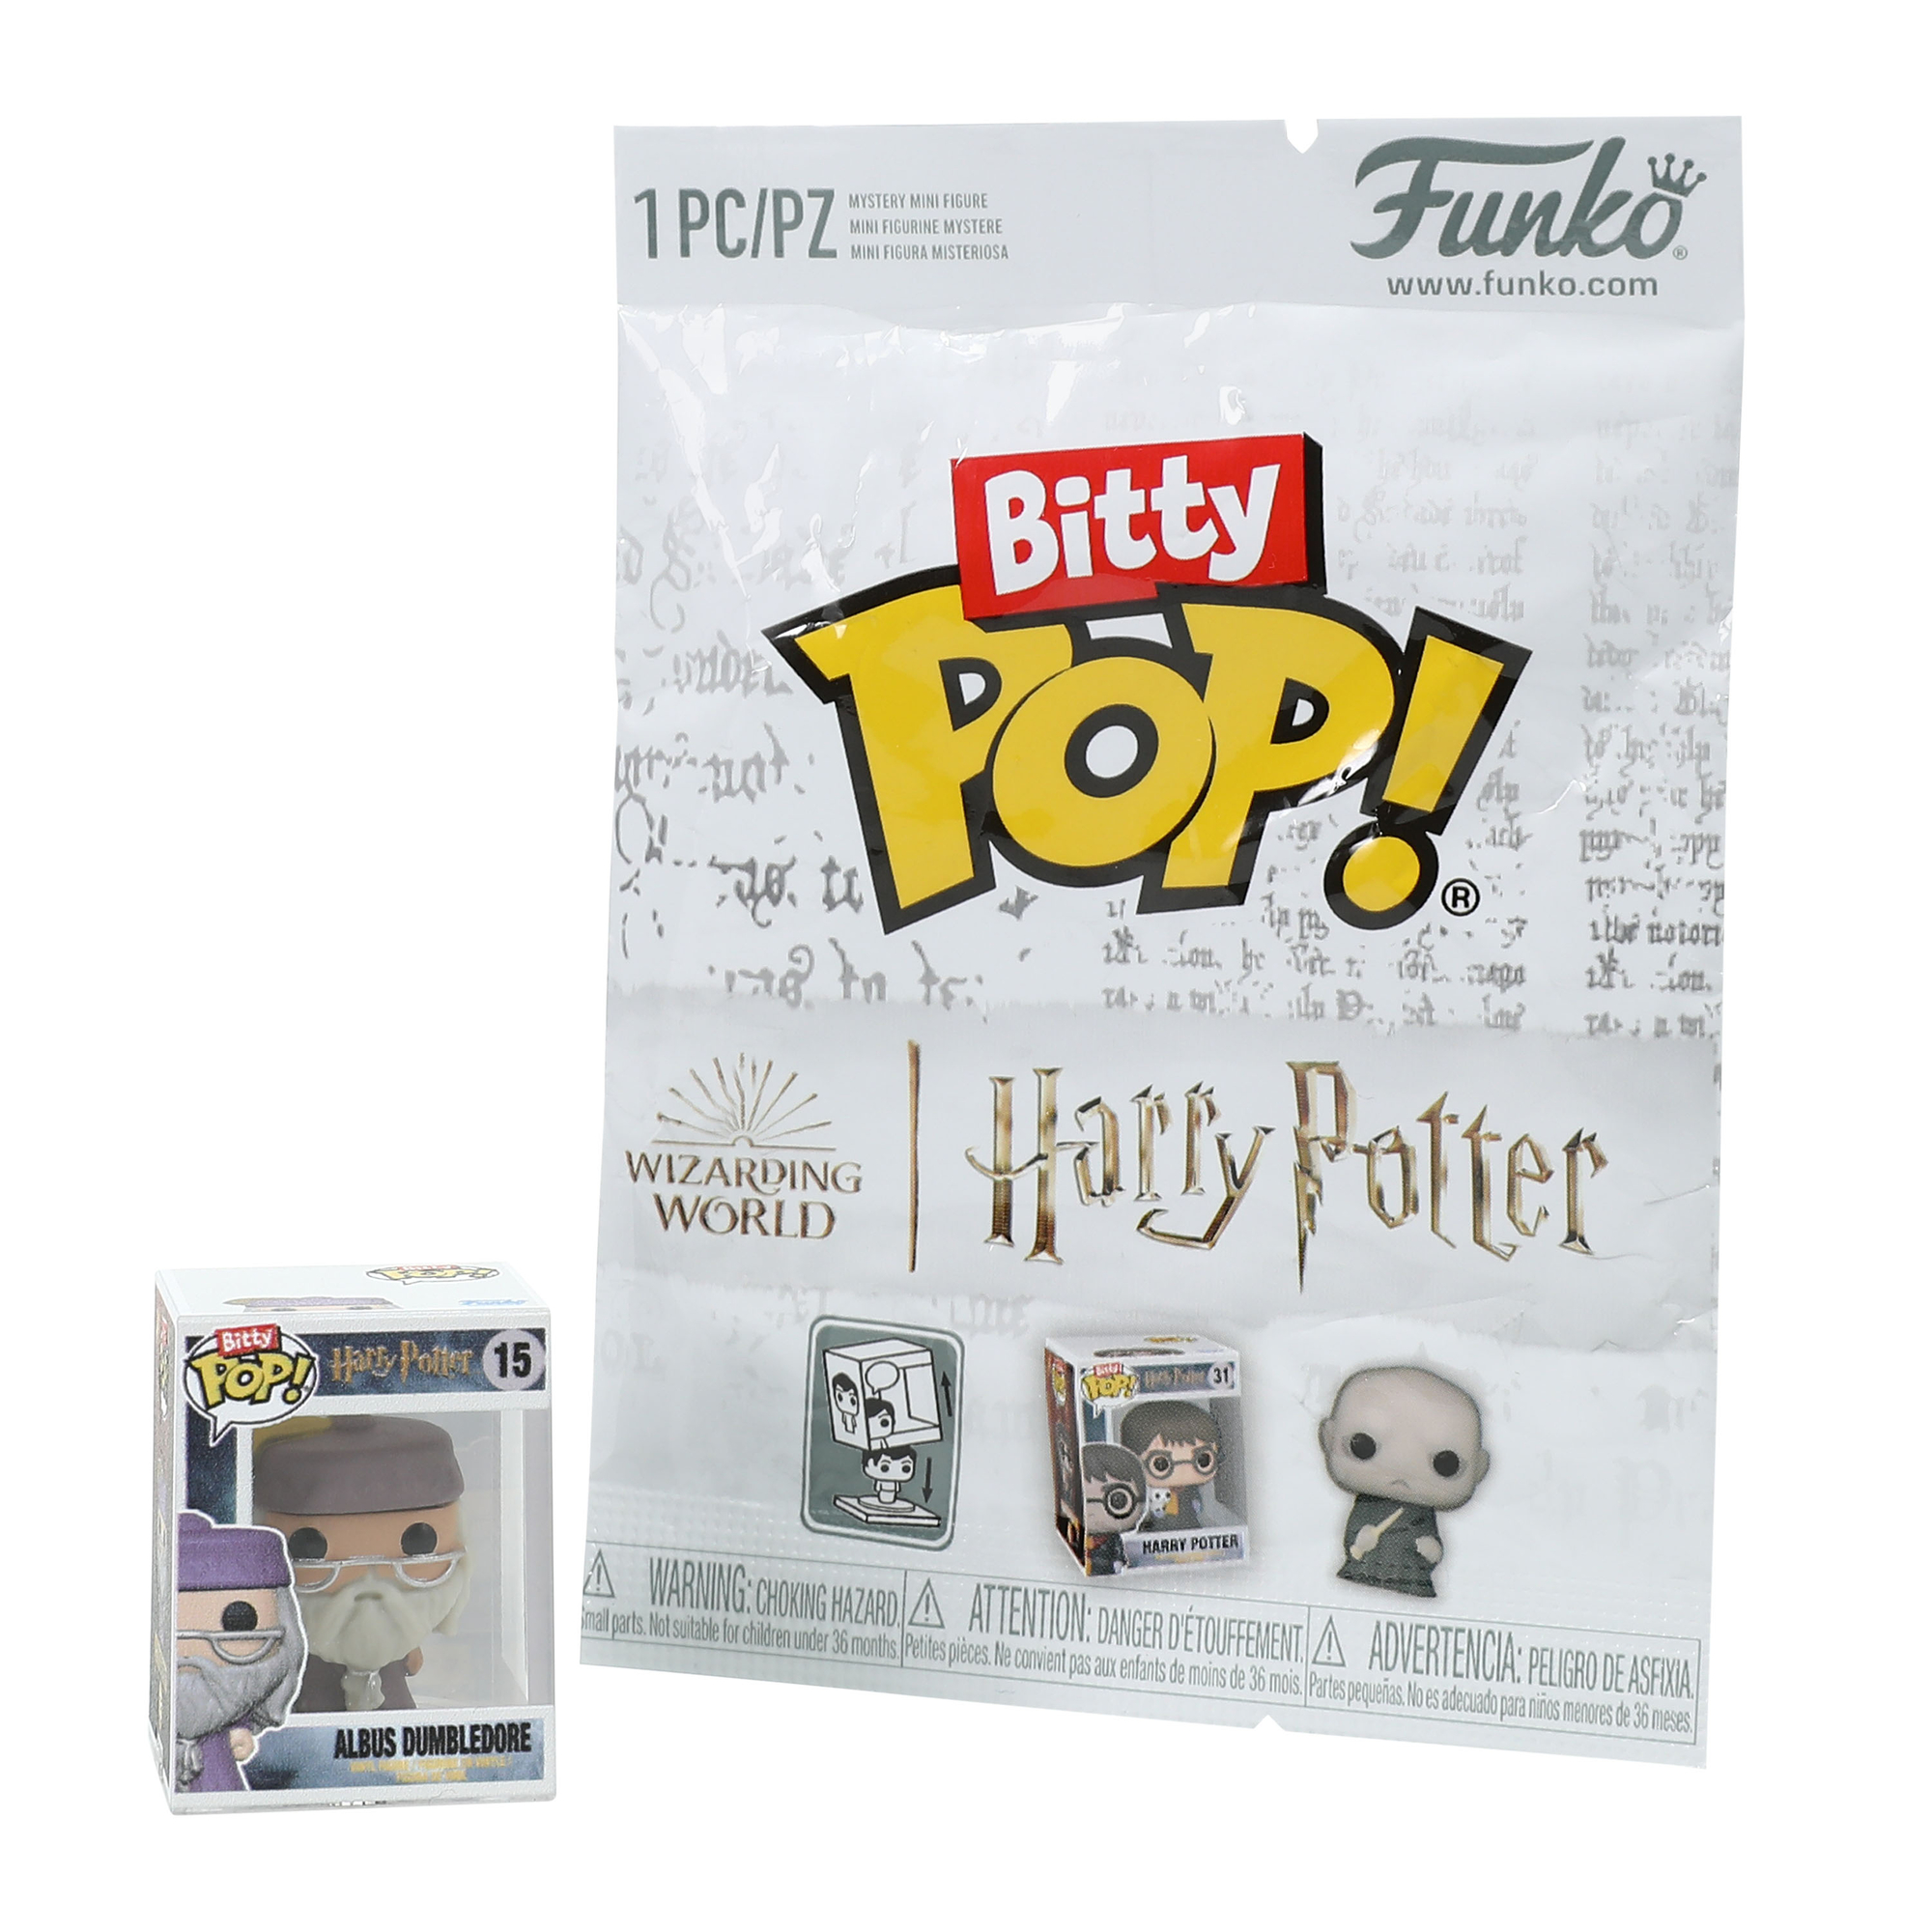 Mini Disney & Harry Potter Funko Bitty Pop! Are The Latest Singapore Blind  Bag Toy Craze